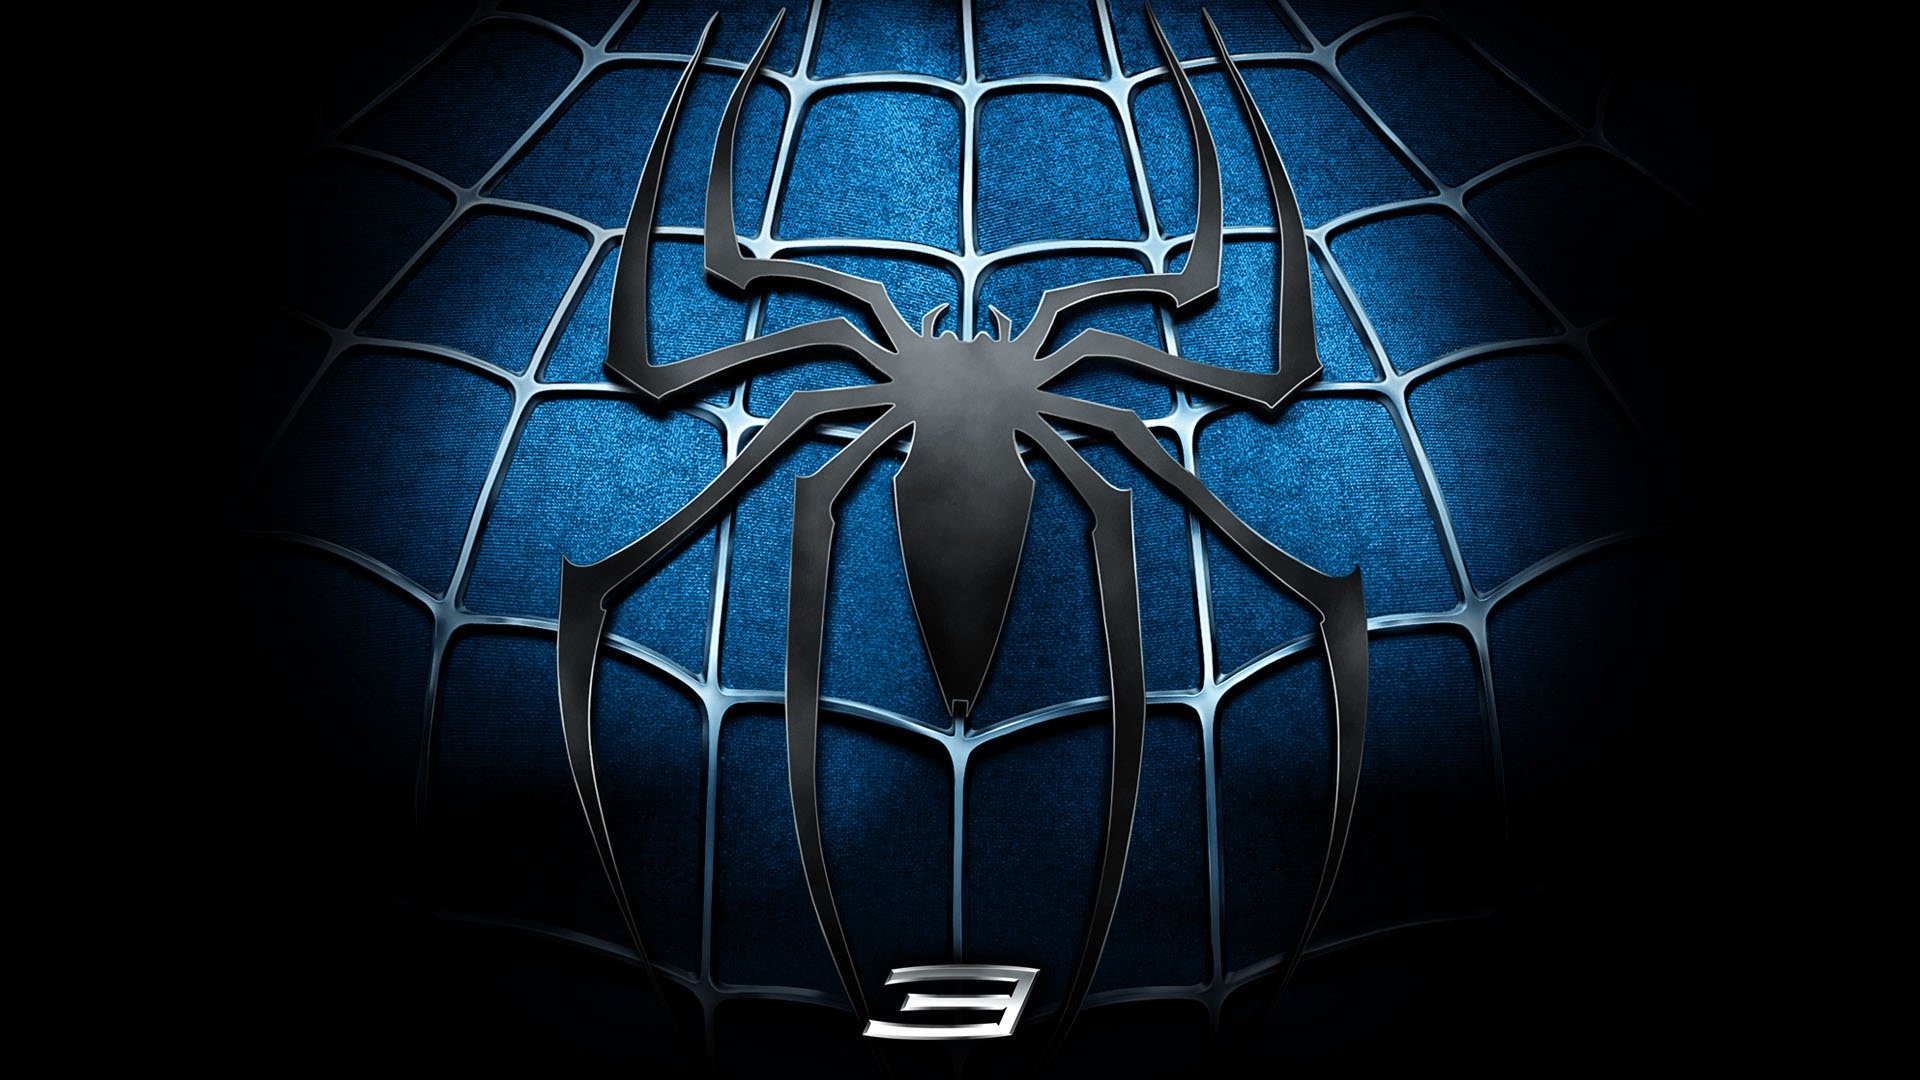 spiderman 3 logo wallpaper hd wallpaper